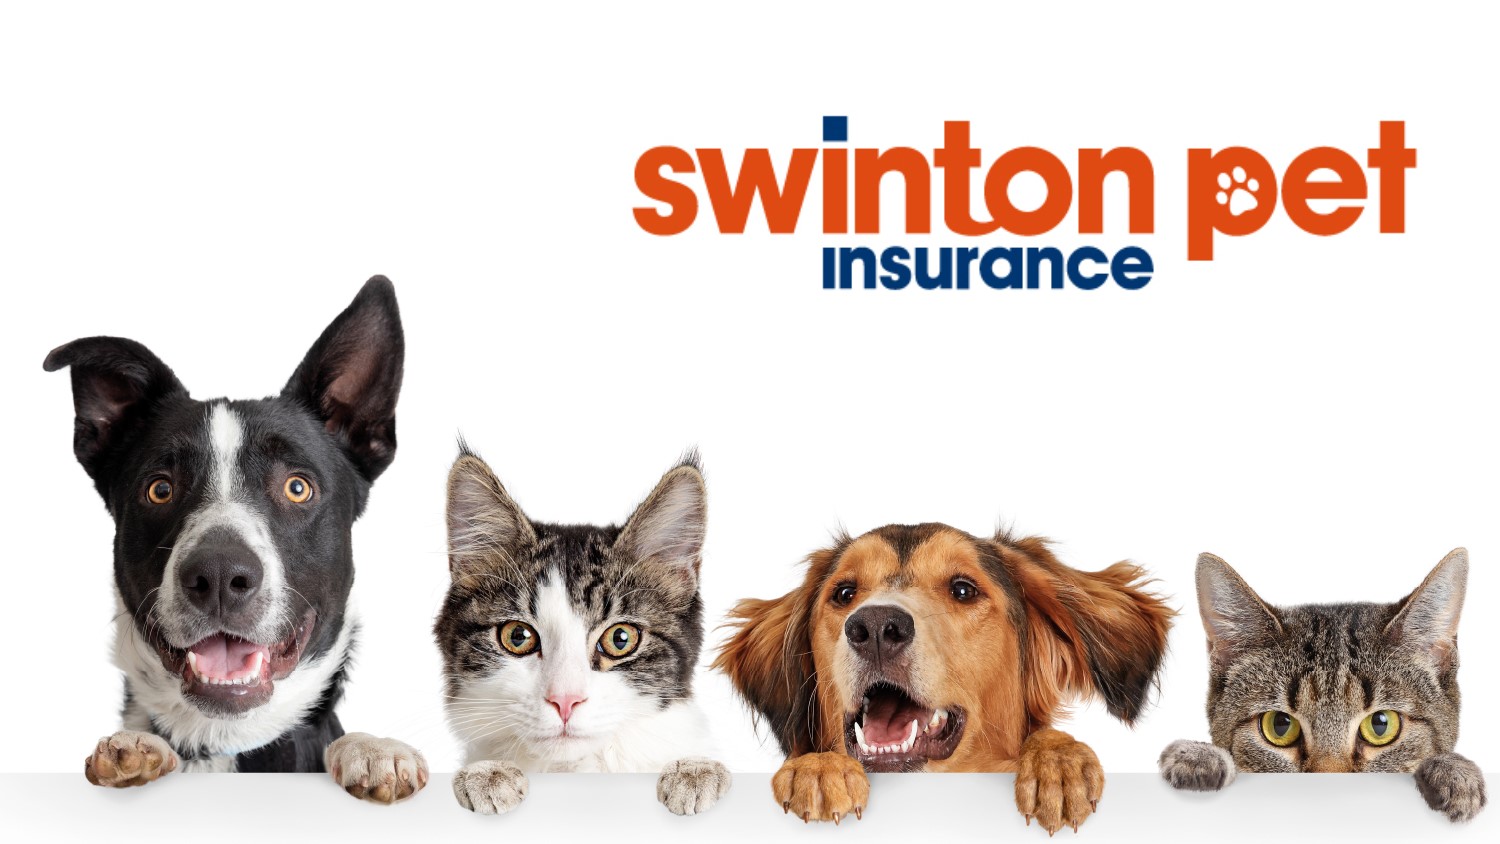 Swinton Pet Insurance Review